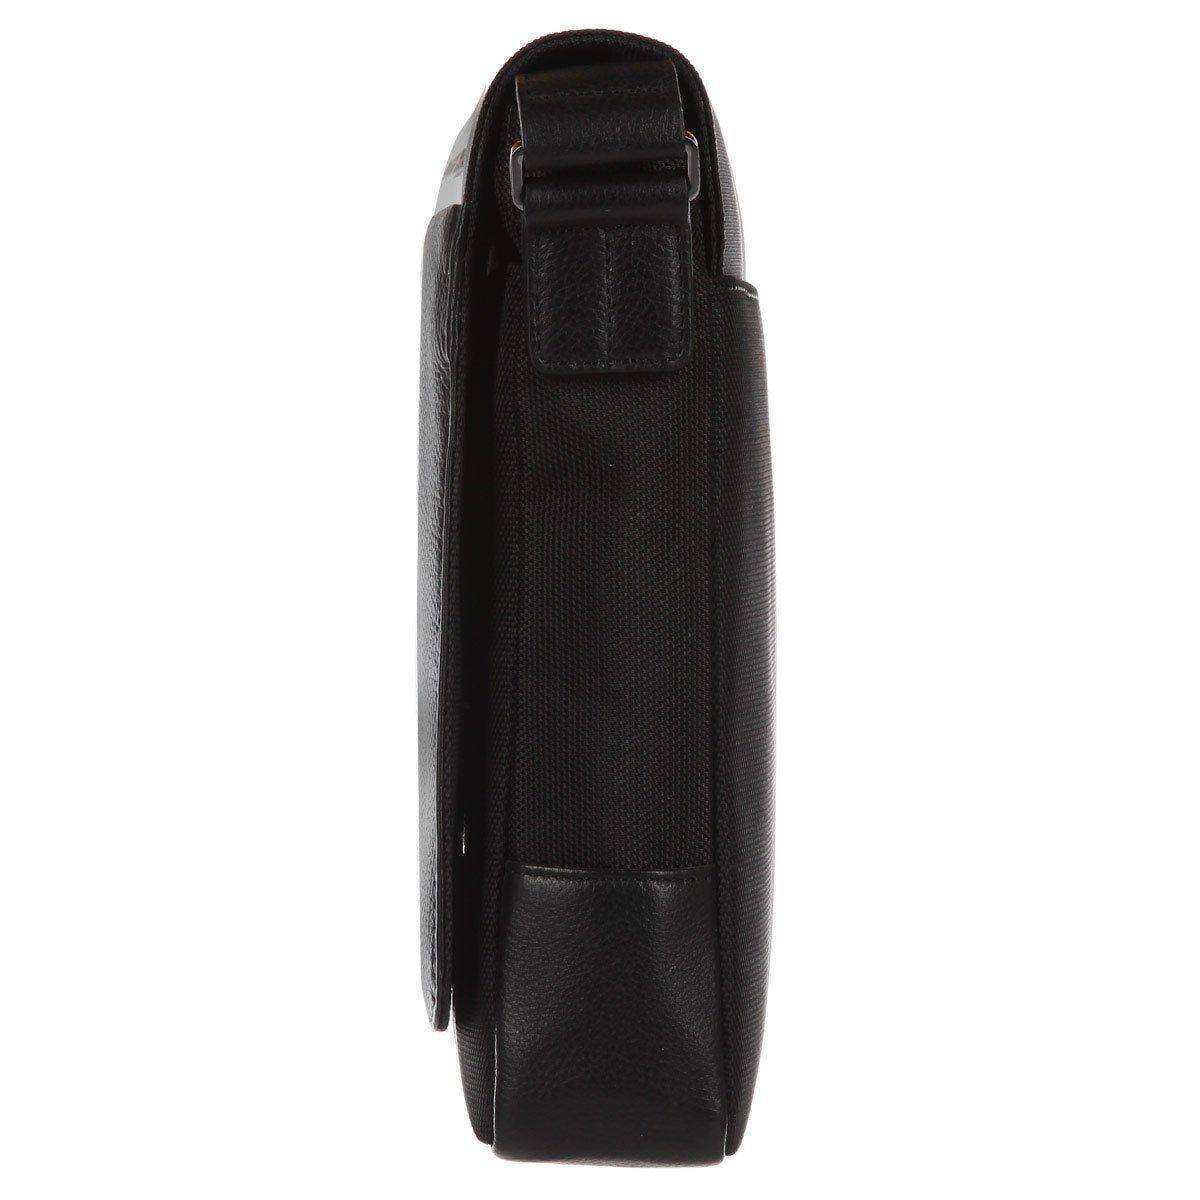 Сумка репортер Braun Buffel MURANO Shoulder Bag flap 14365, цвет черный, размер ONE SIZE - фото 3